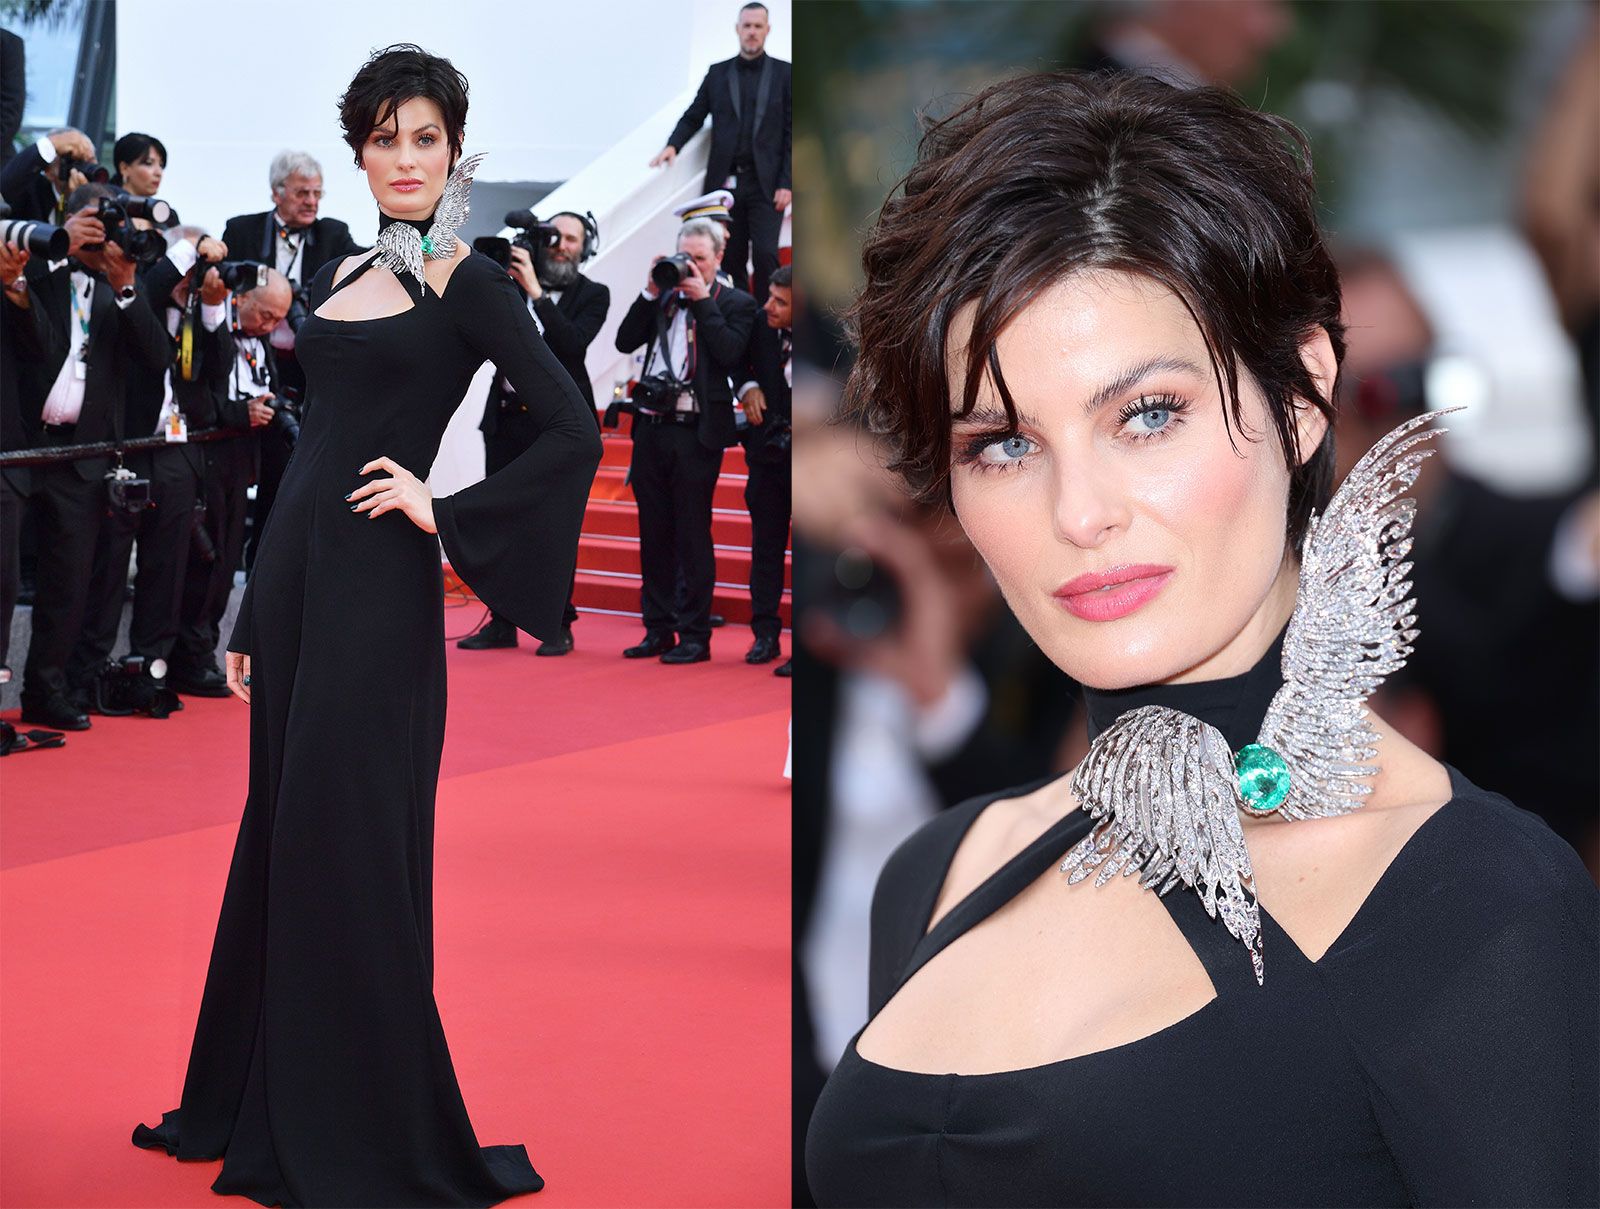 Brazilian model Isabeli Fontana wearing the Life 2022 brooch by Elsa Jin at the Cannes Film Festival 2022 